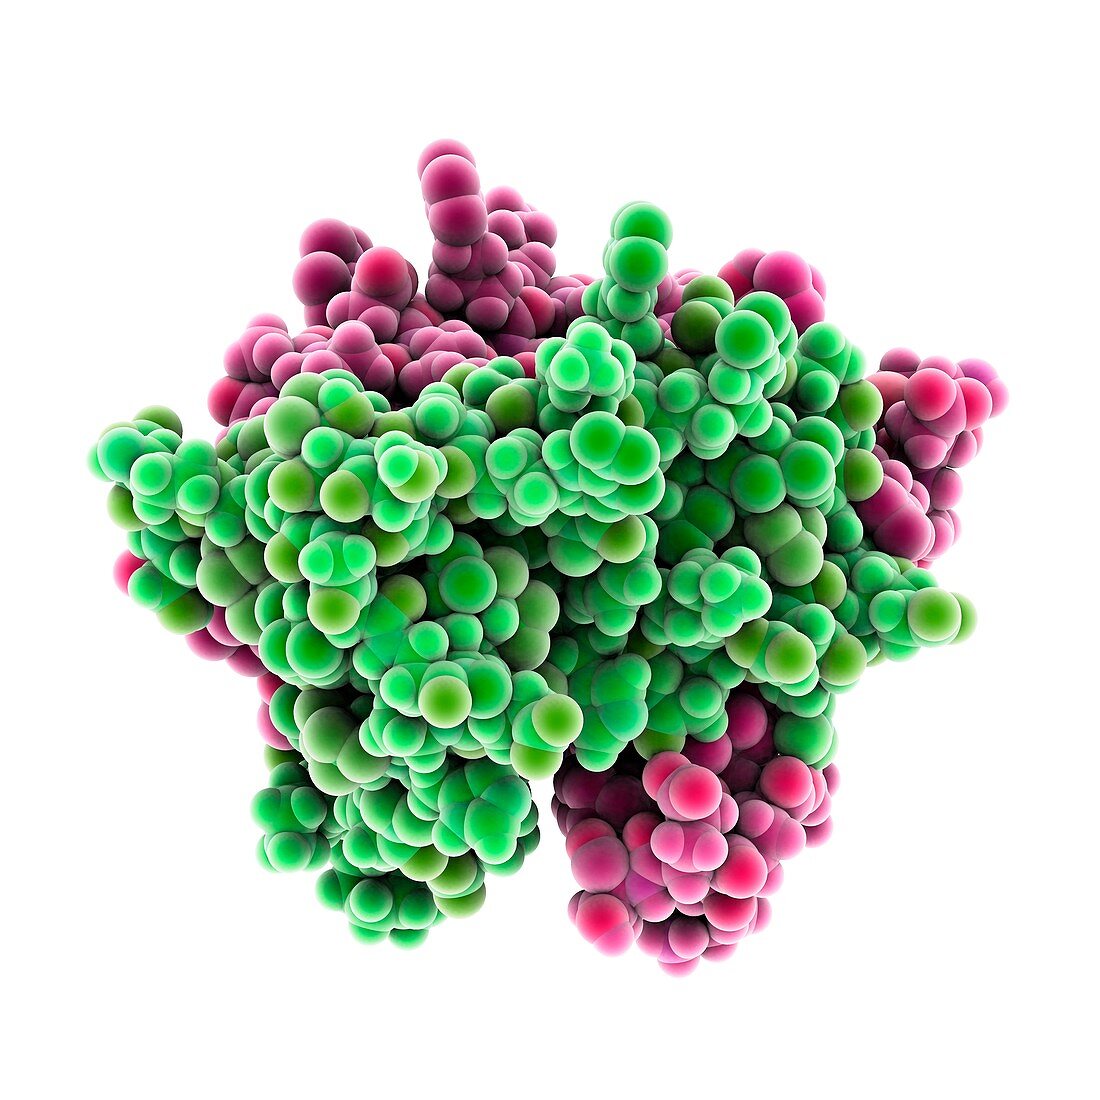 Influenza A non-structural protein 1